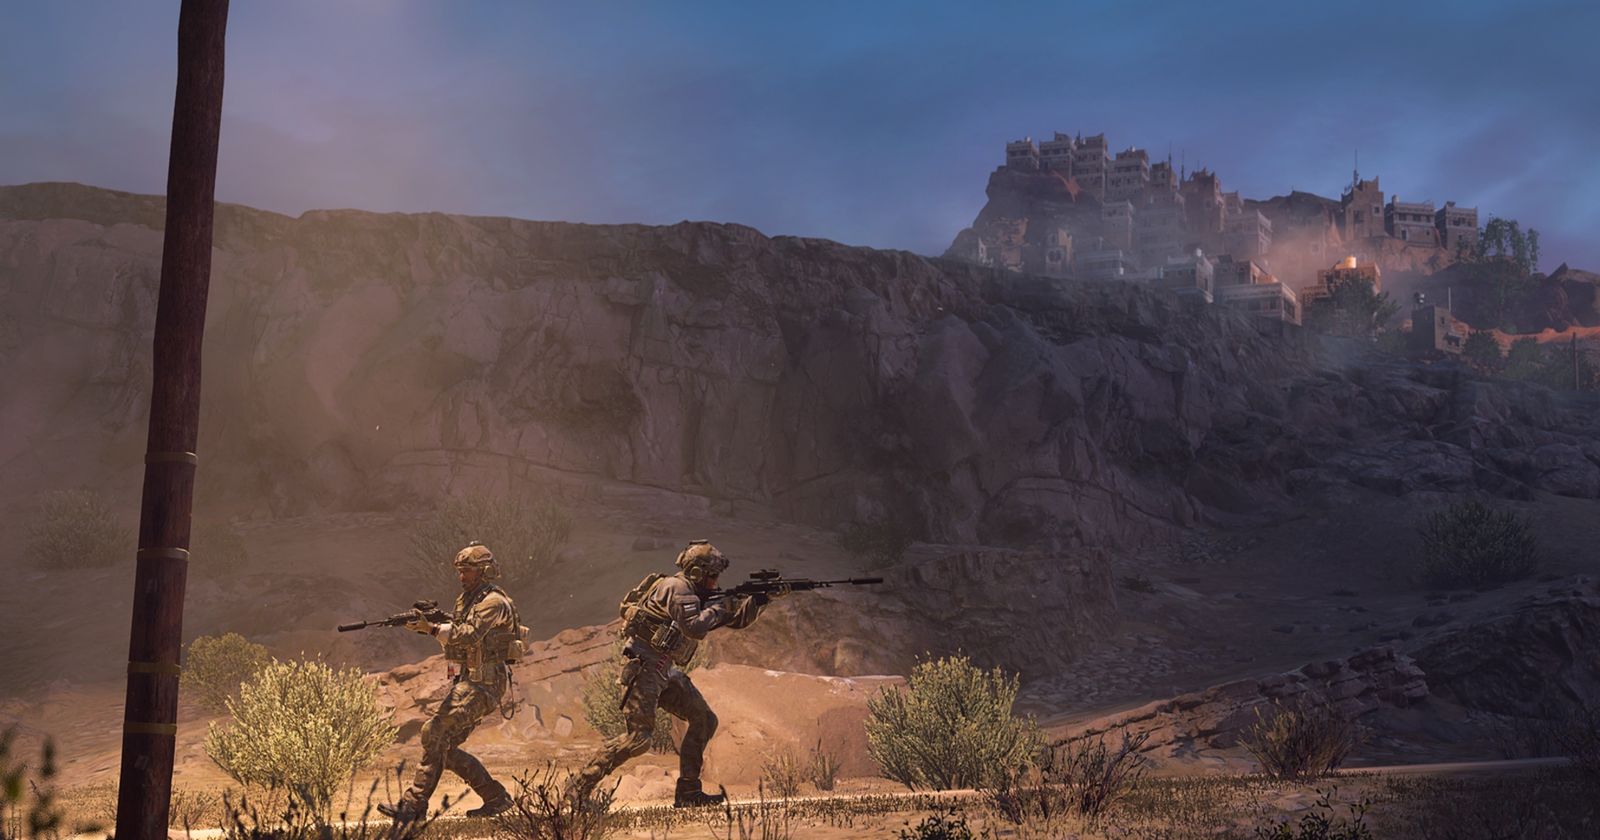 Full intel on Call of Duty: Modern Warfare II and Warzone Season